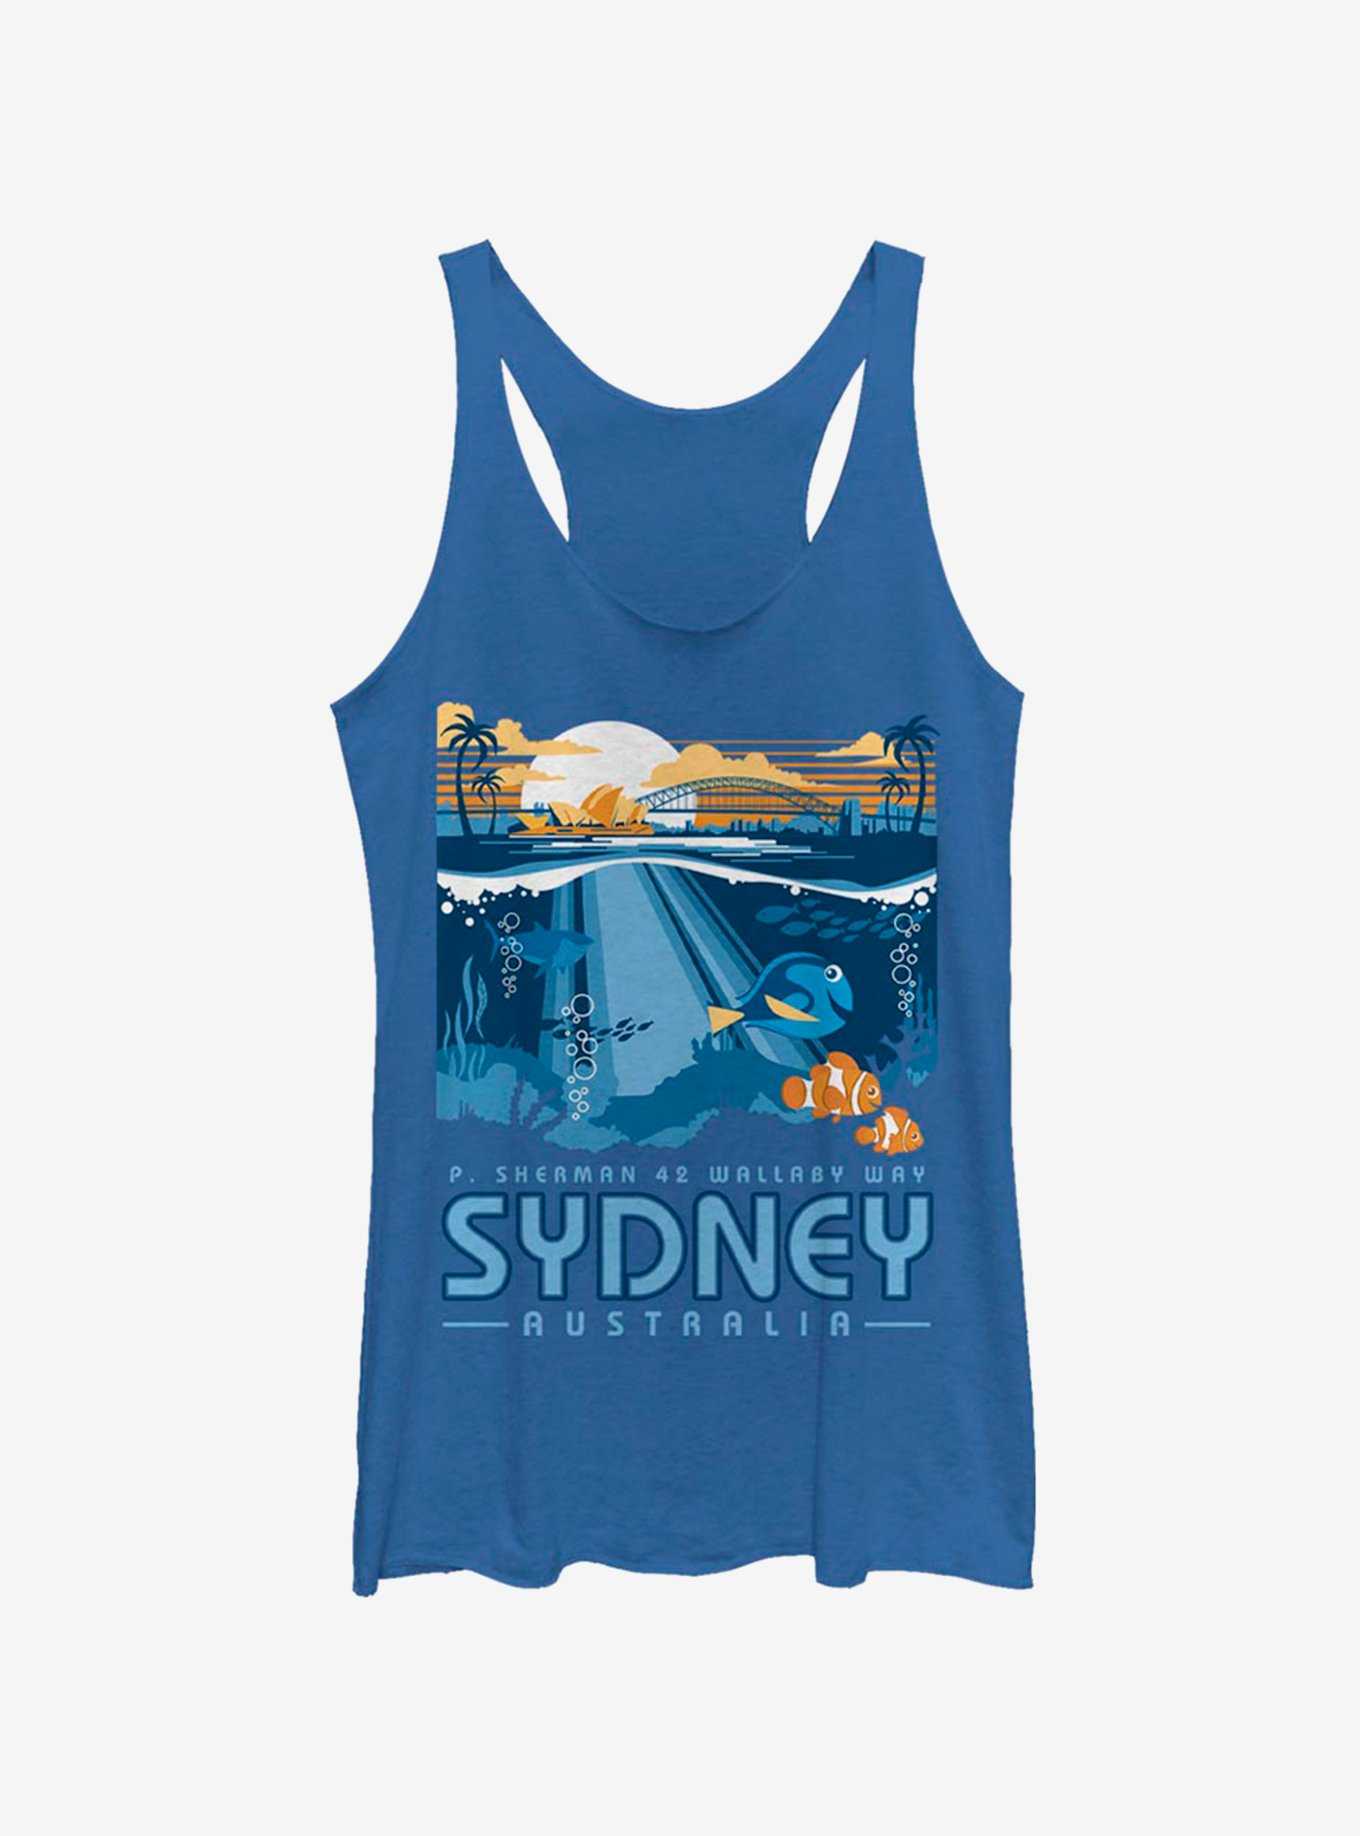 Disney Pixar Finding Nemo Wallaby Way Sydney Girls Tank, , hi-res